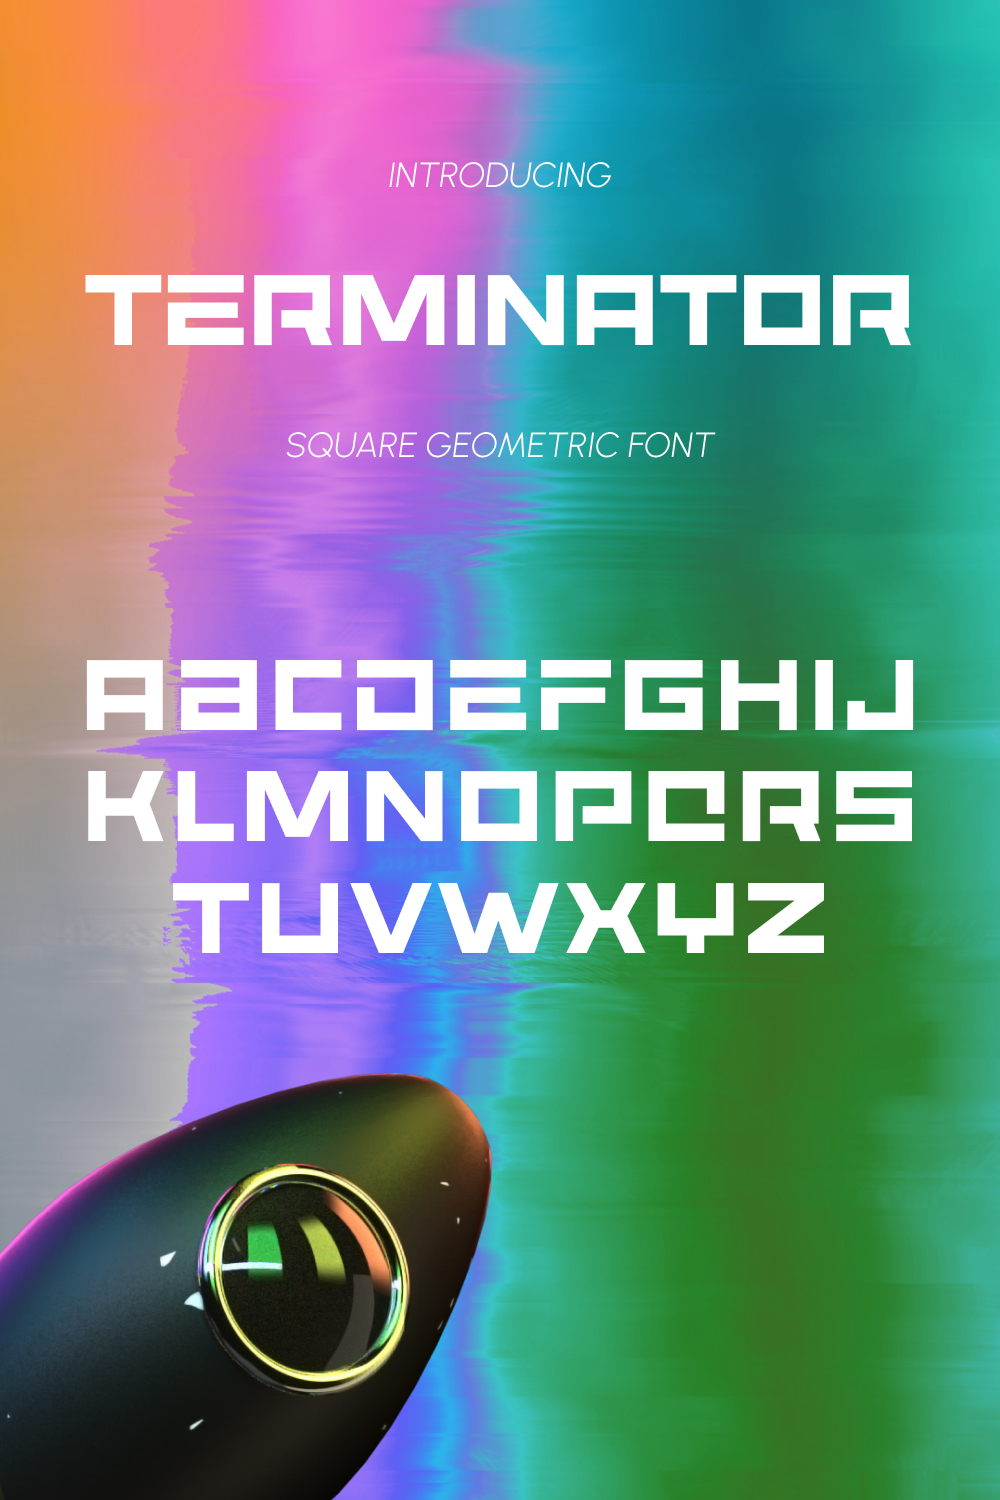 Terminator font of pinterest.